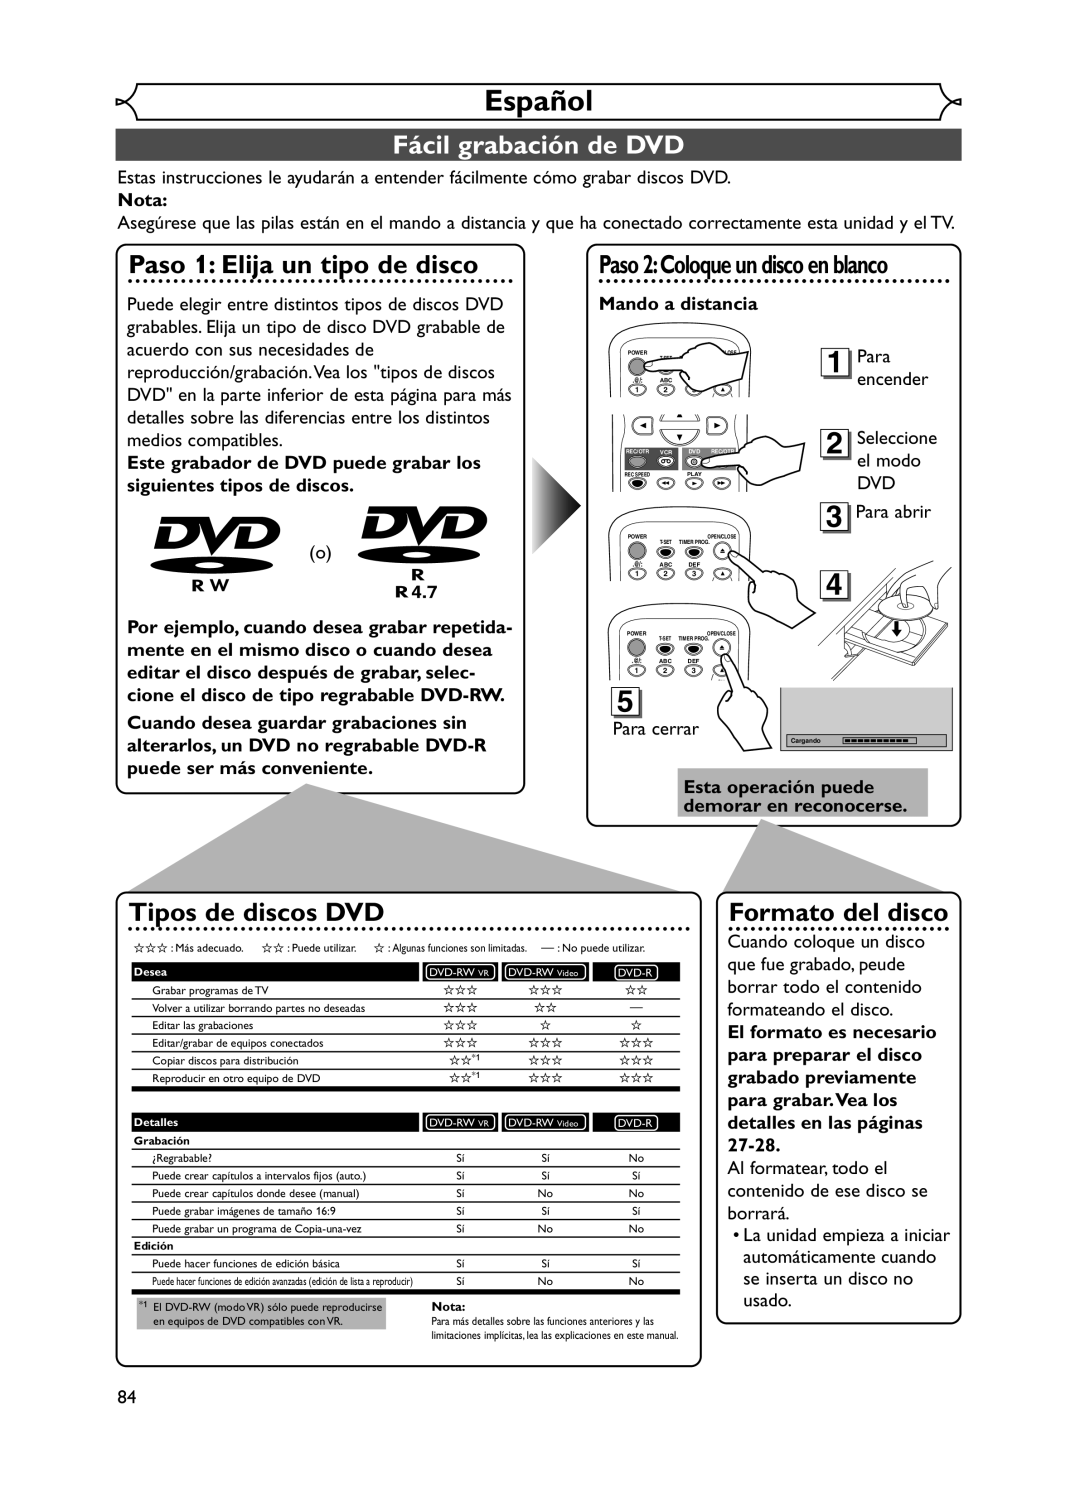 Emerson EWR20V5 Español, Nota, Este grabador de DVD puede grabar los siguientes tipos de discos, Mando a distancia 